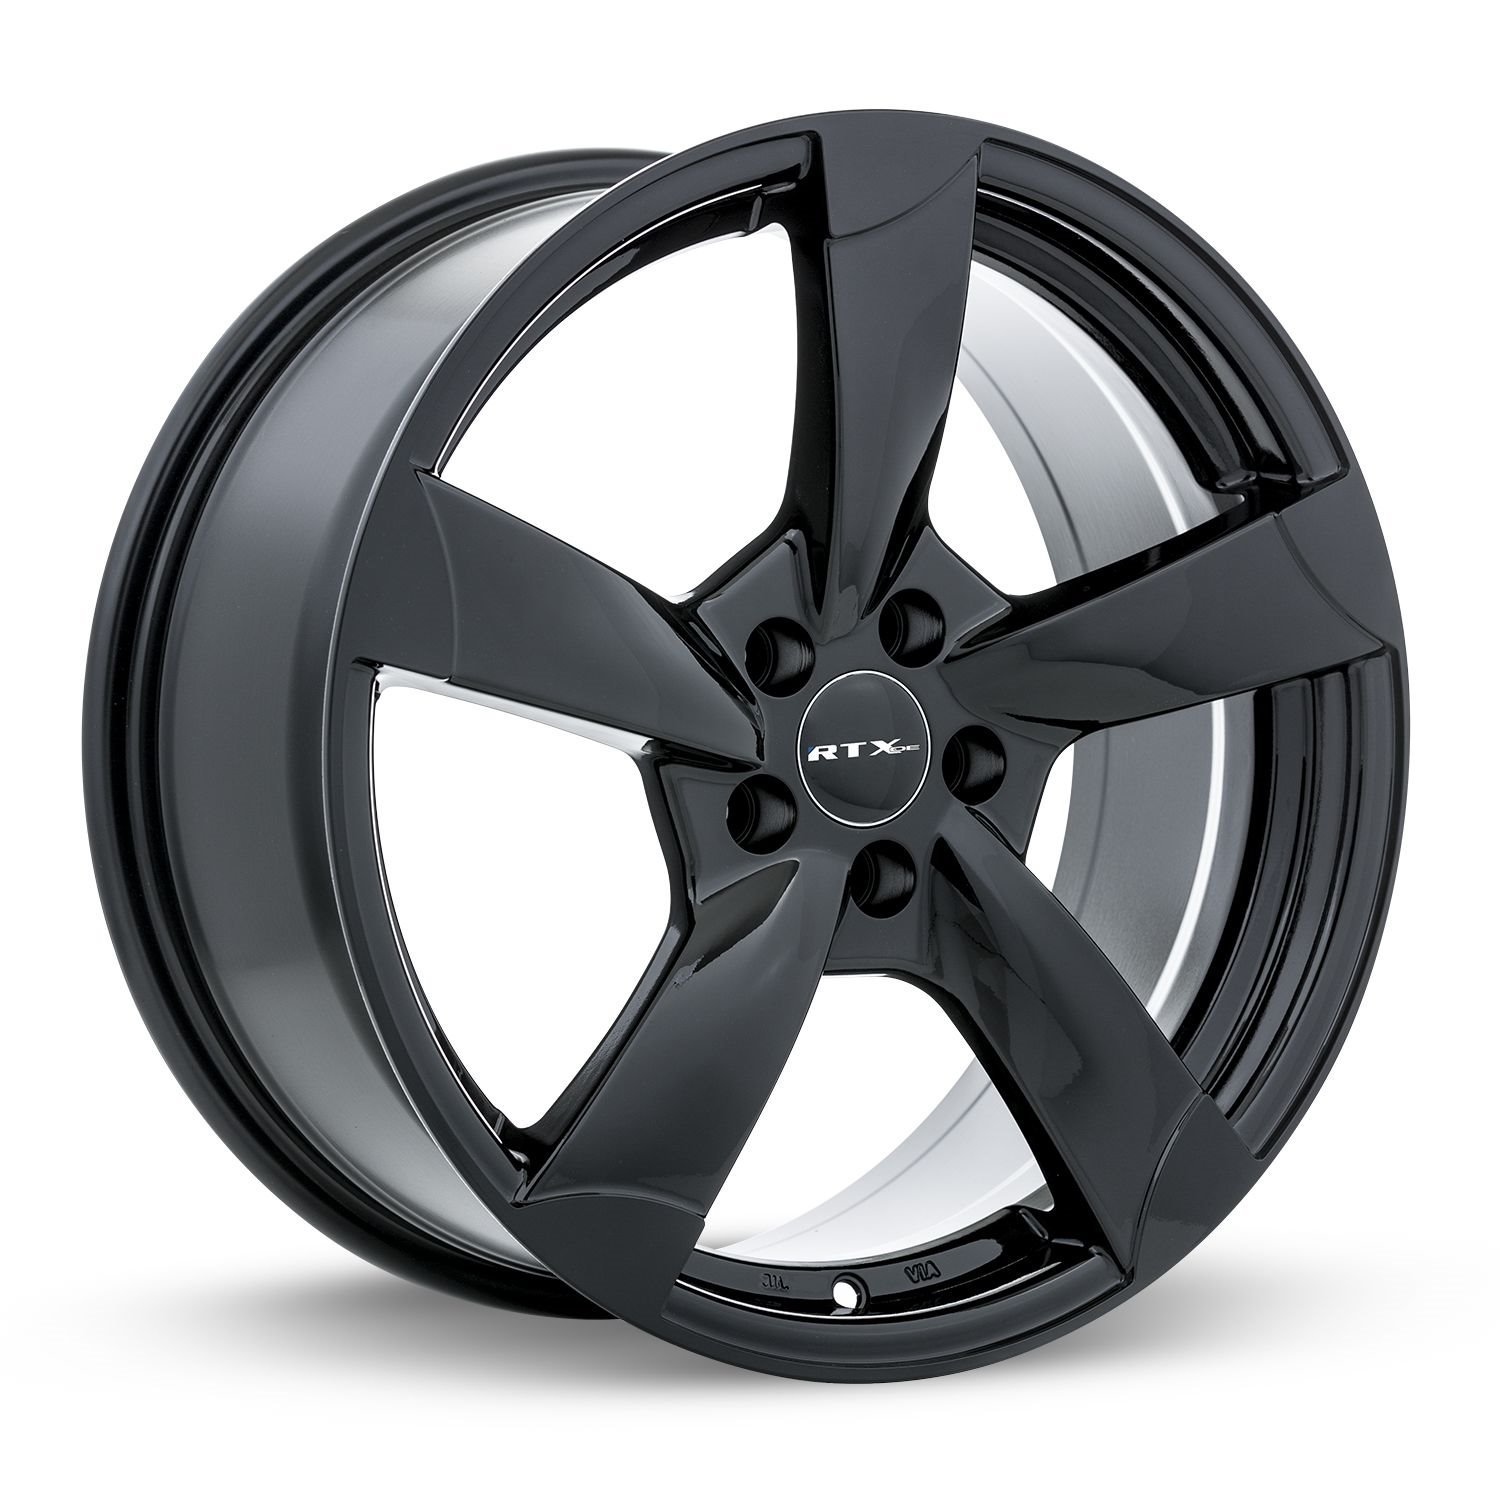 082155 OE-Series RS II Wheel [Size: 17" x 7.50"] Gloss Black Finish